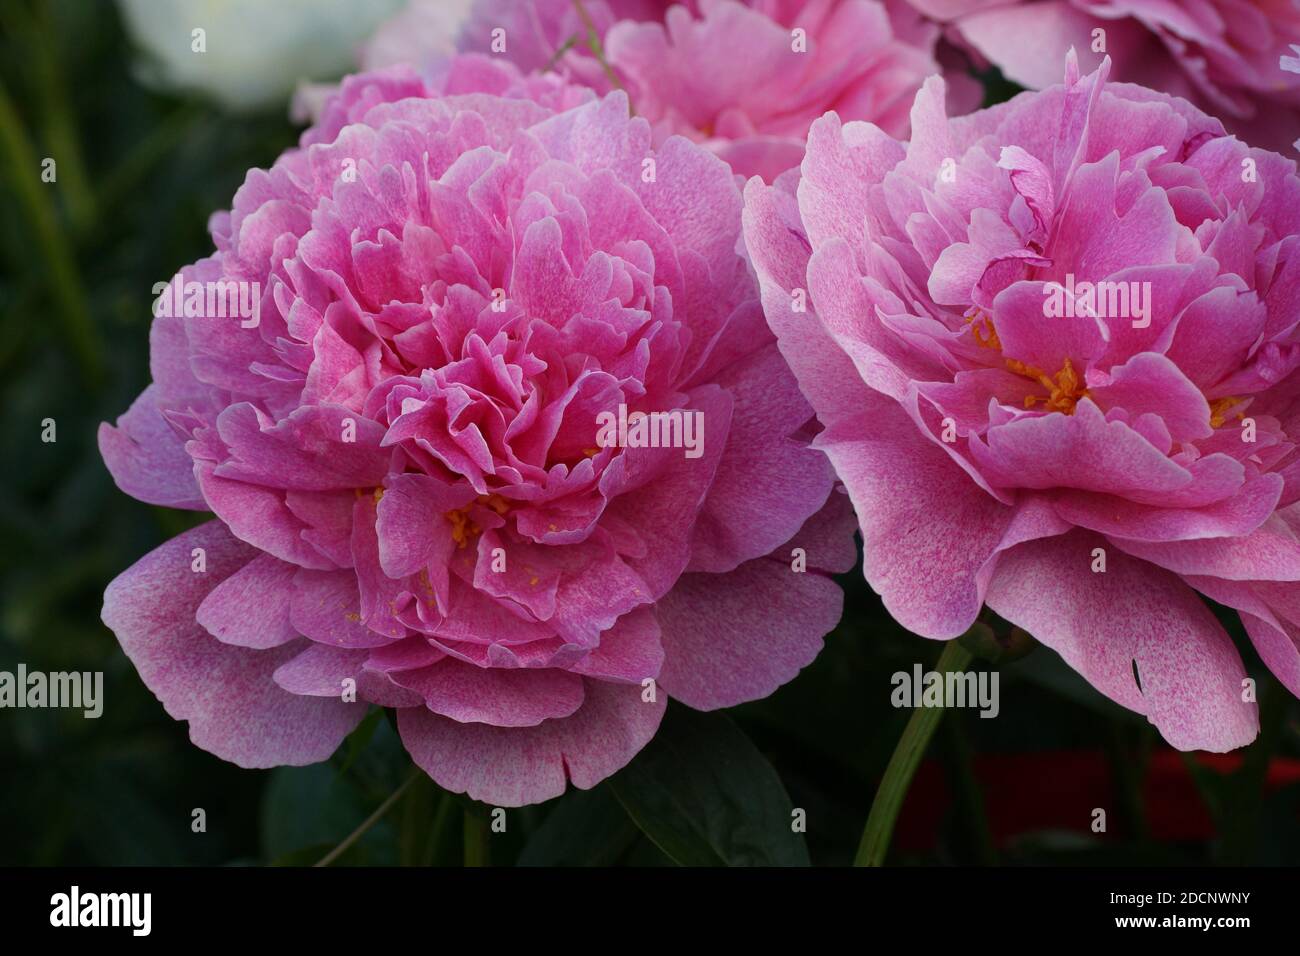 Pfingstrose Der Fawn. Doppelte rosa Pfingstrose Blume. Im Garten blüht ein wunderschöner rosa Pfingstrose. Stockfoto